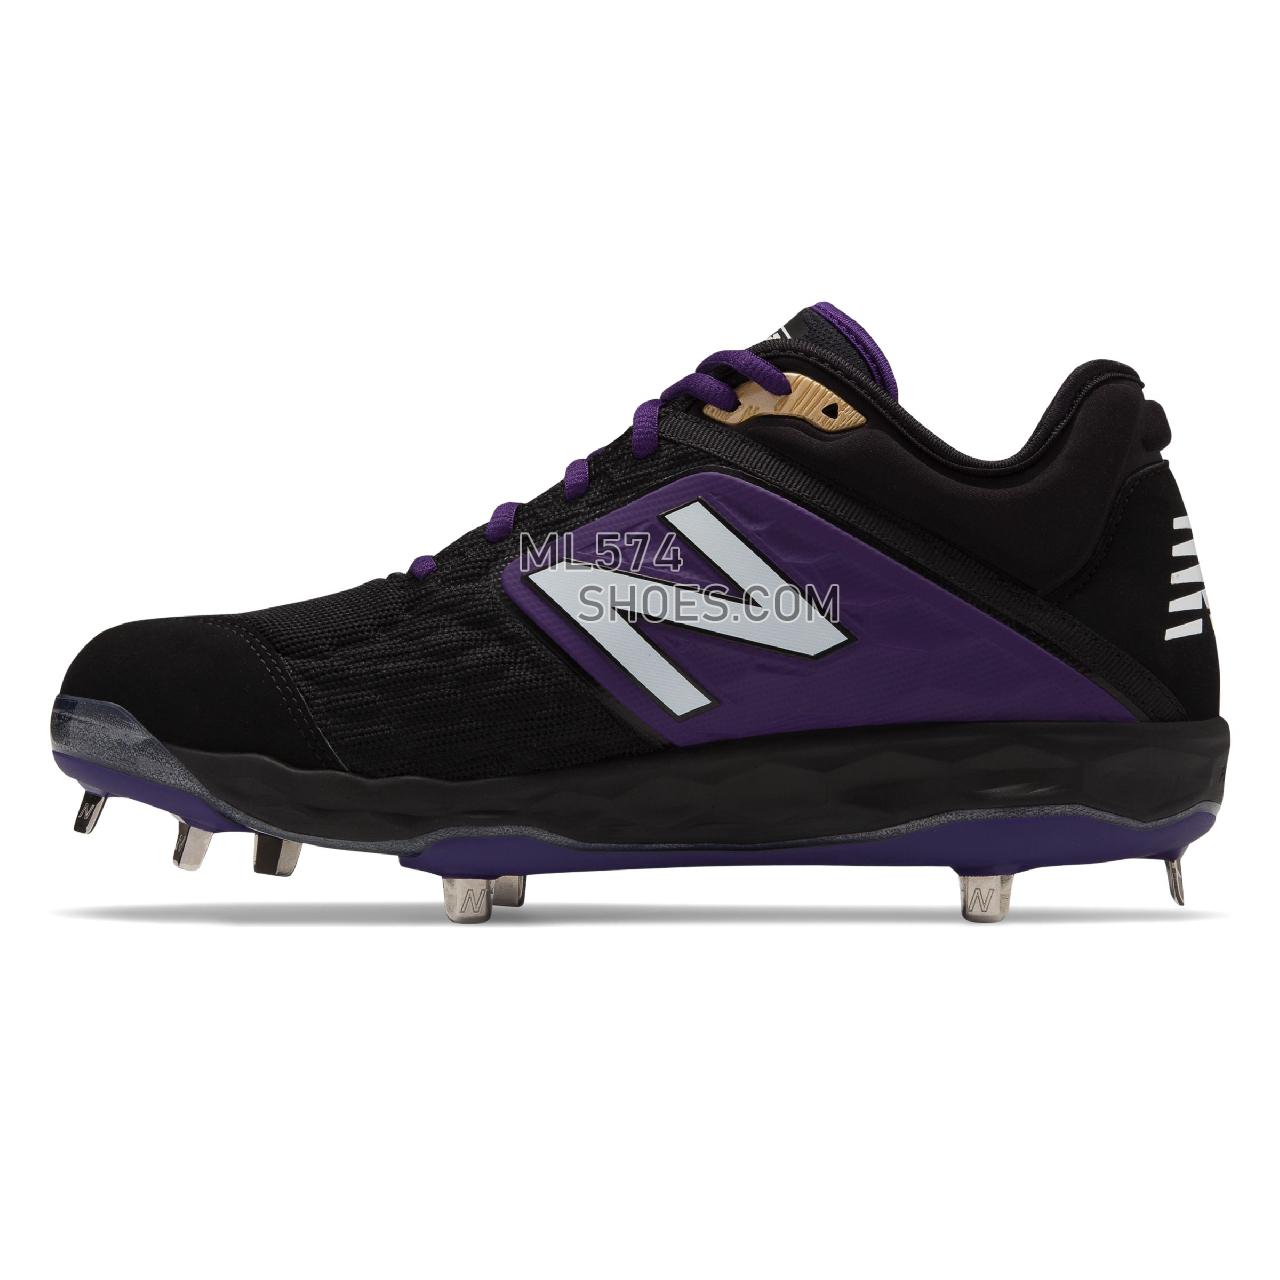 New Balance Fresh Foam 3000v4 Metal - Men's 3000 - Baseball Black with Purple - L3000BP4